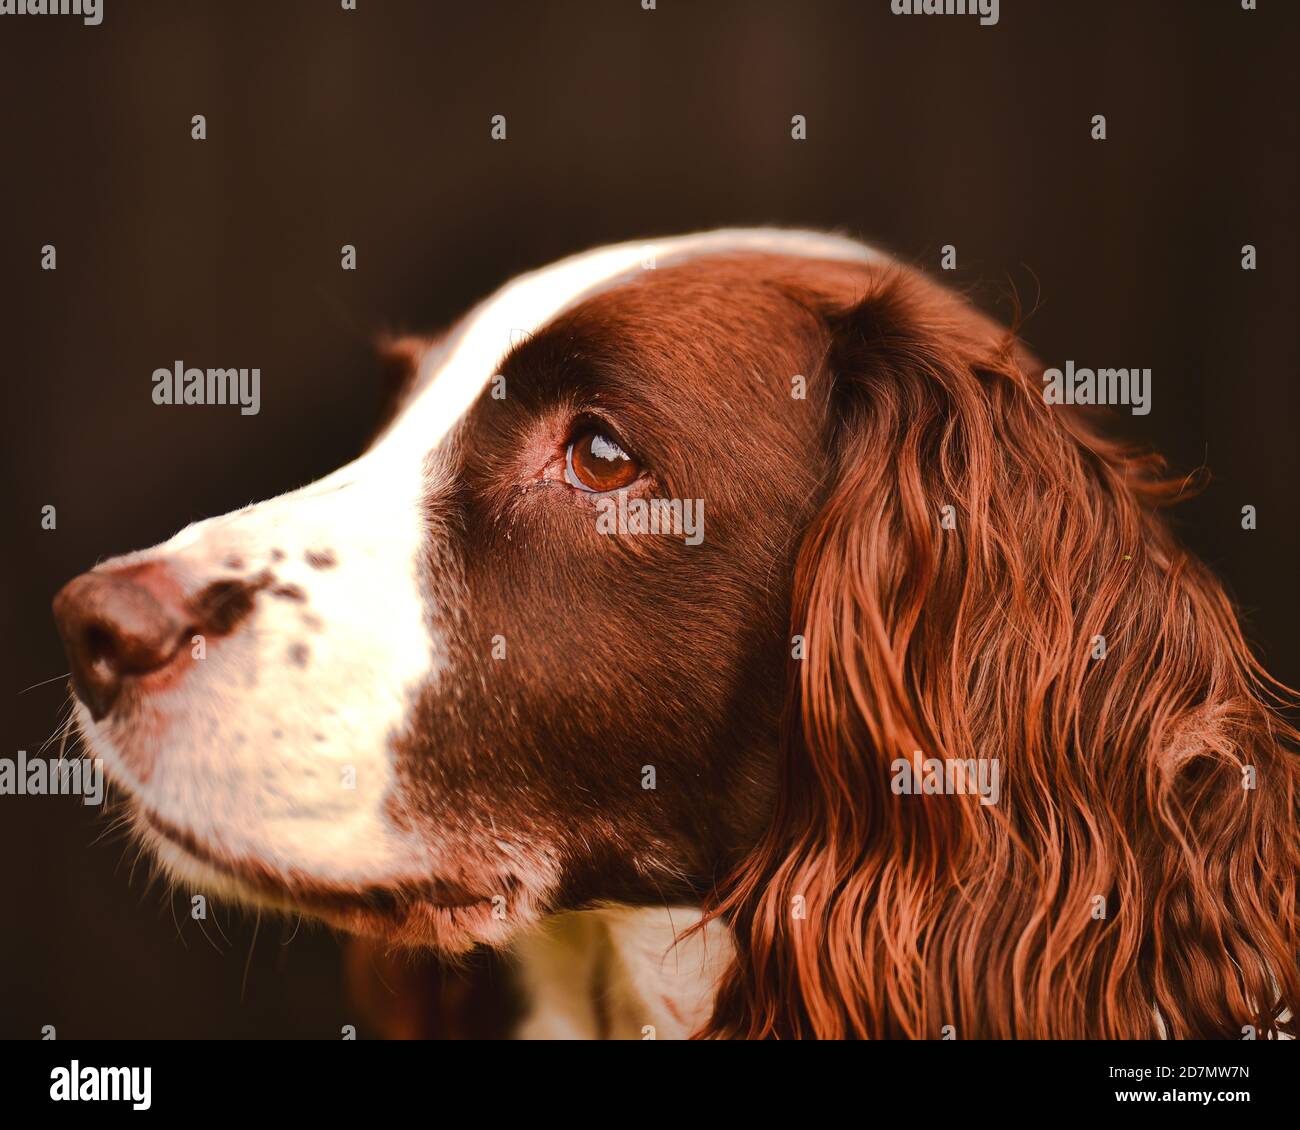 Englisch Springer Spaniel - Seitenprofil - Kopfschuss - Braun Jagdhund - Langohrhund - fokussierter Hund - Posed Dog - gehorsamer Hund - Hundeportrait Stockfoto